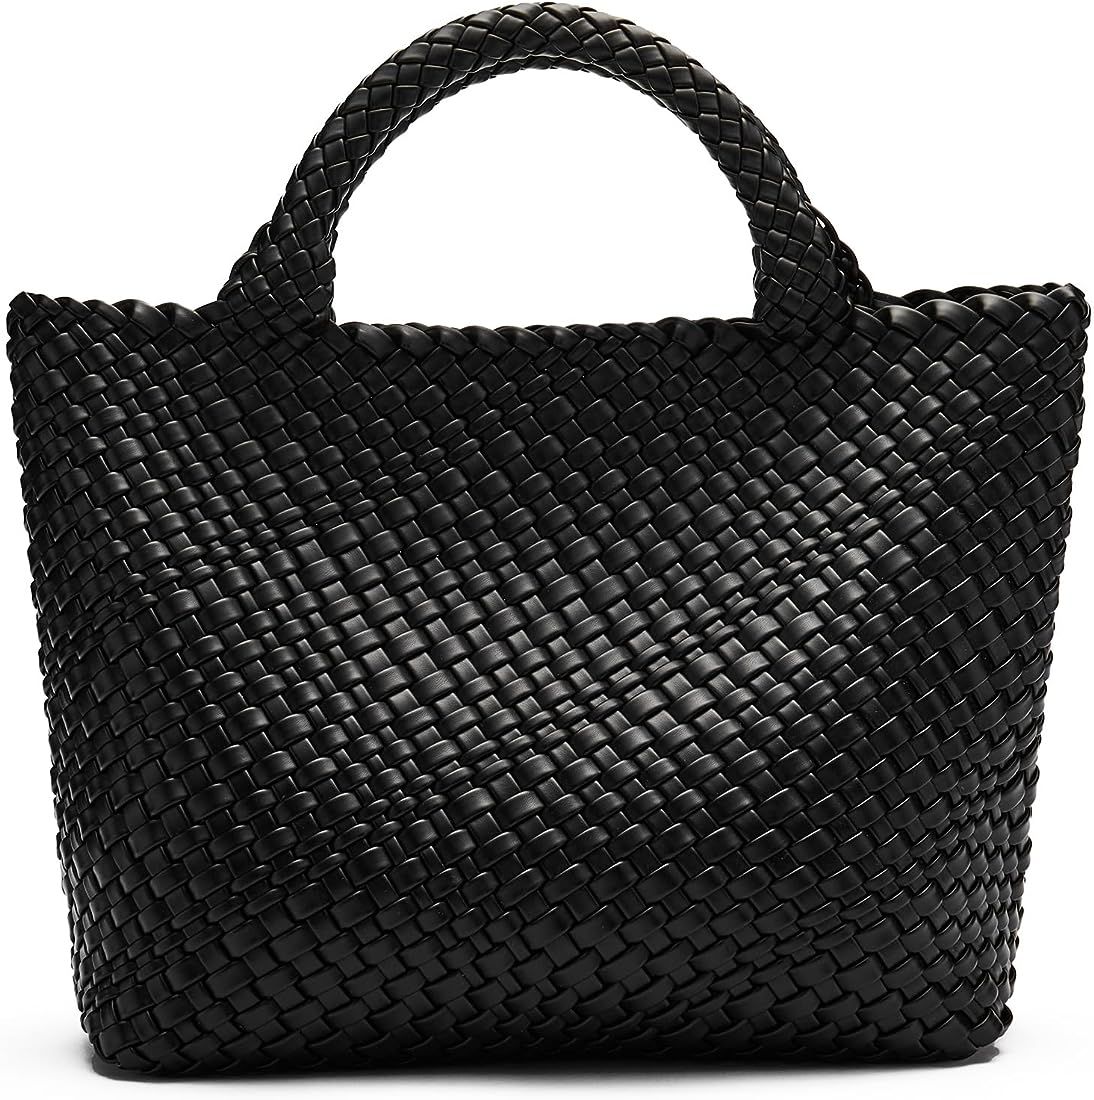 Woven Bags for Women Large Leather Tote Bag Summer Beach Travel Handbags Shopper Shoulder Bag Tre... | Amazon (US)